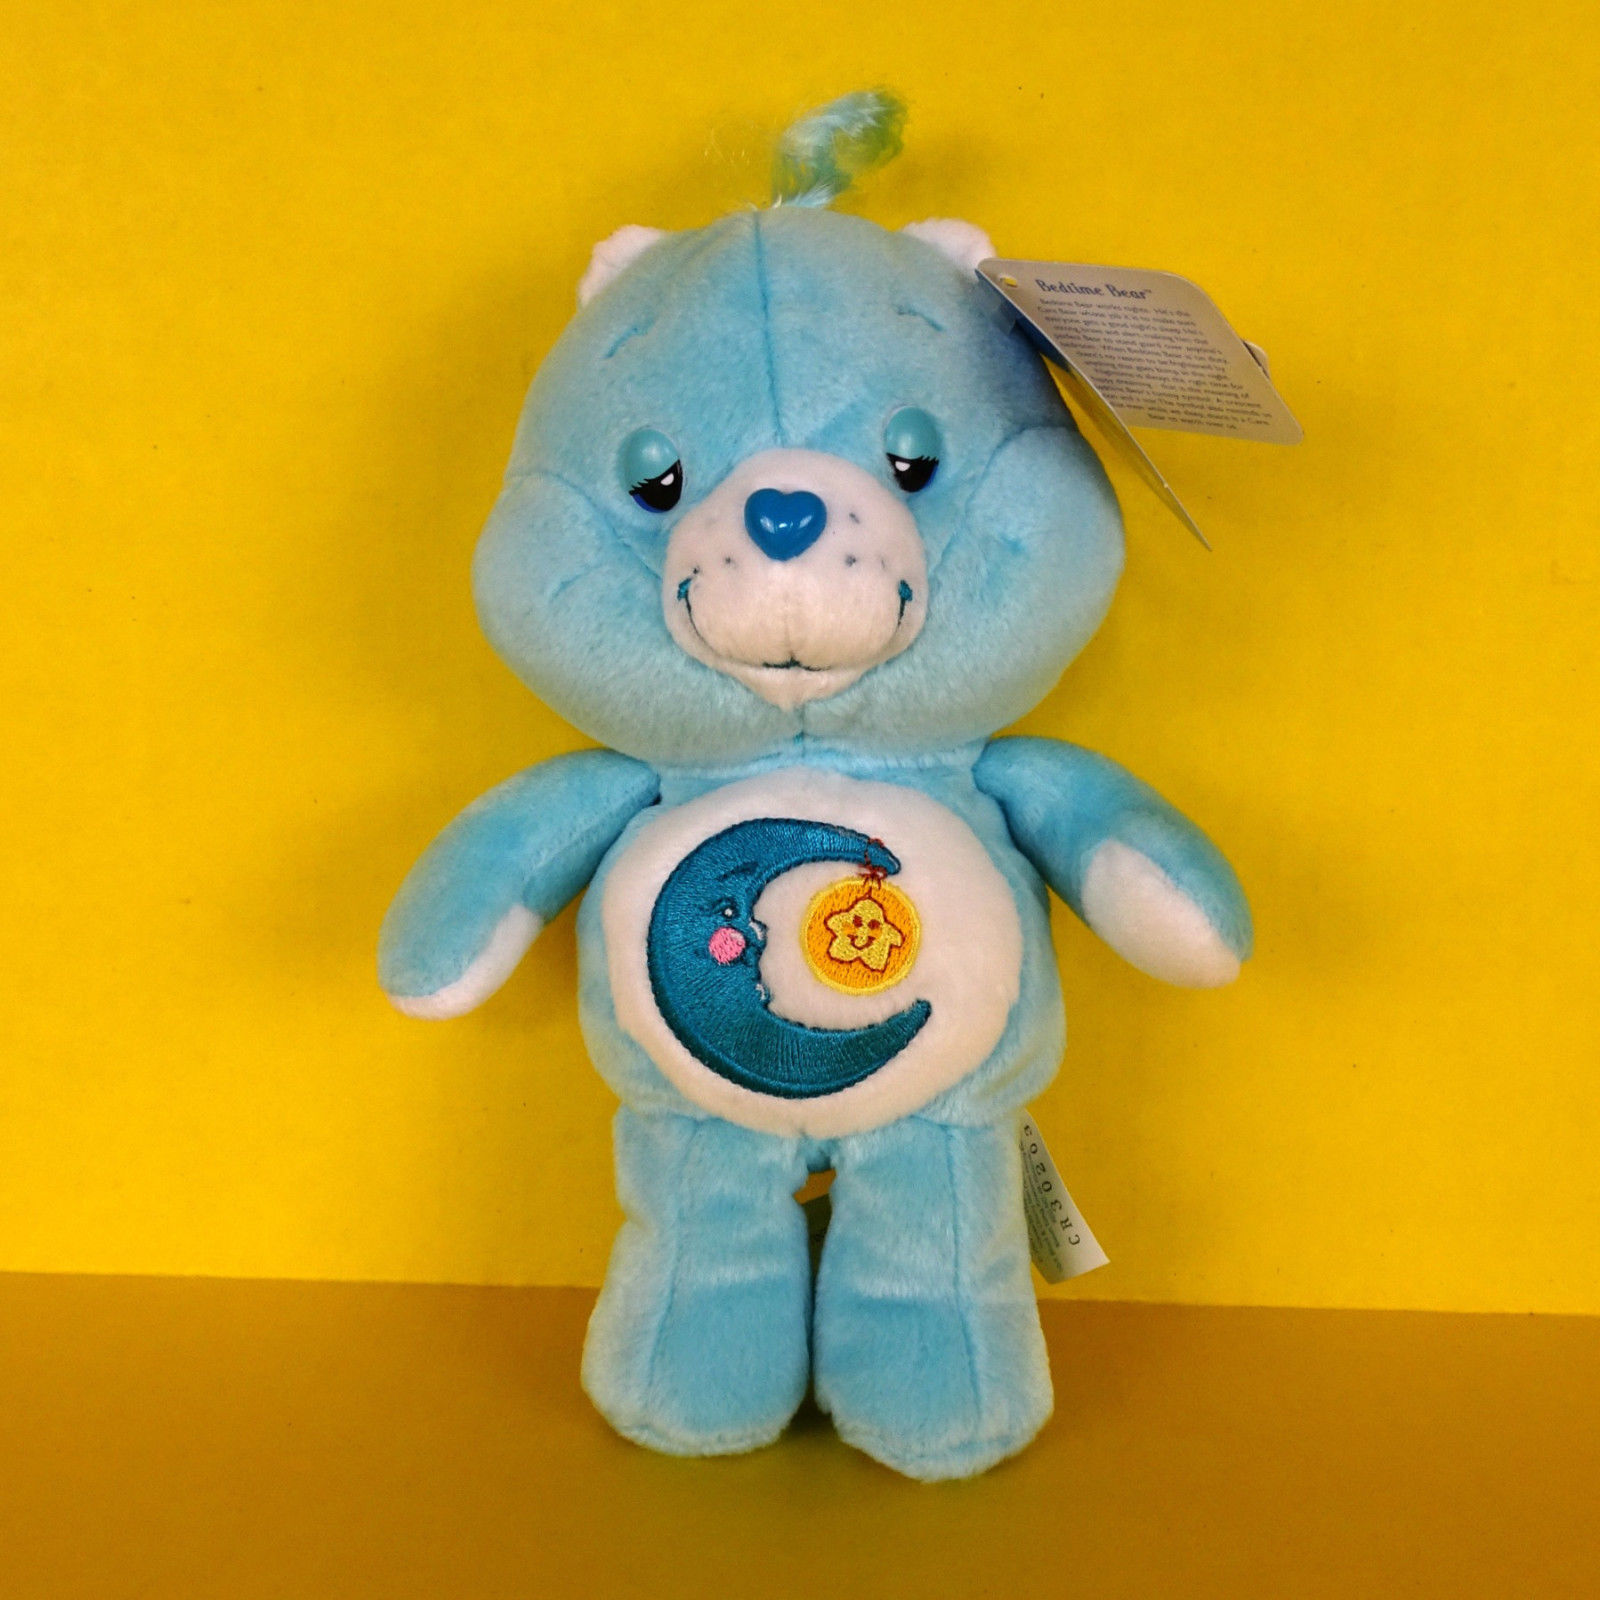 Care Bears Talking Bedtime Bear Blue Plush 8” Sleepy 2003 Stuffed Animal Toy New